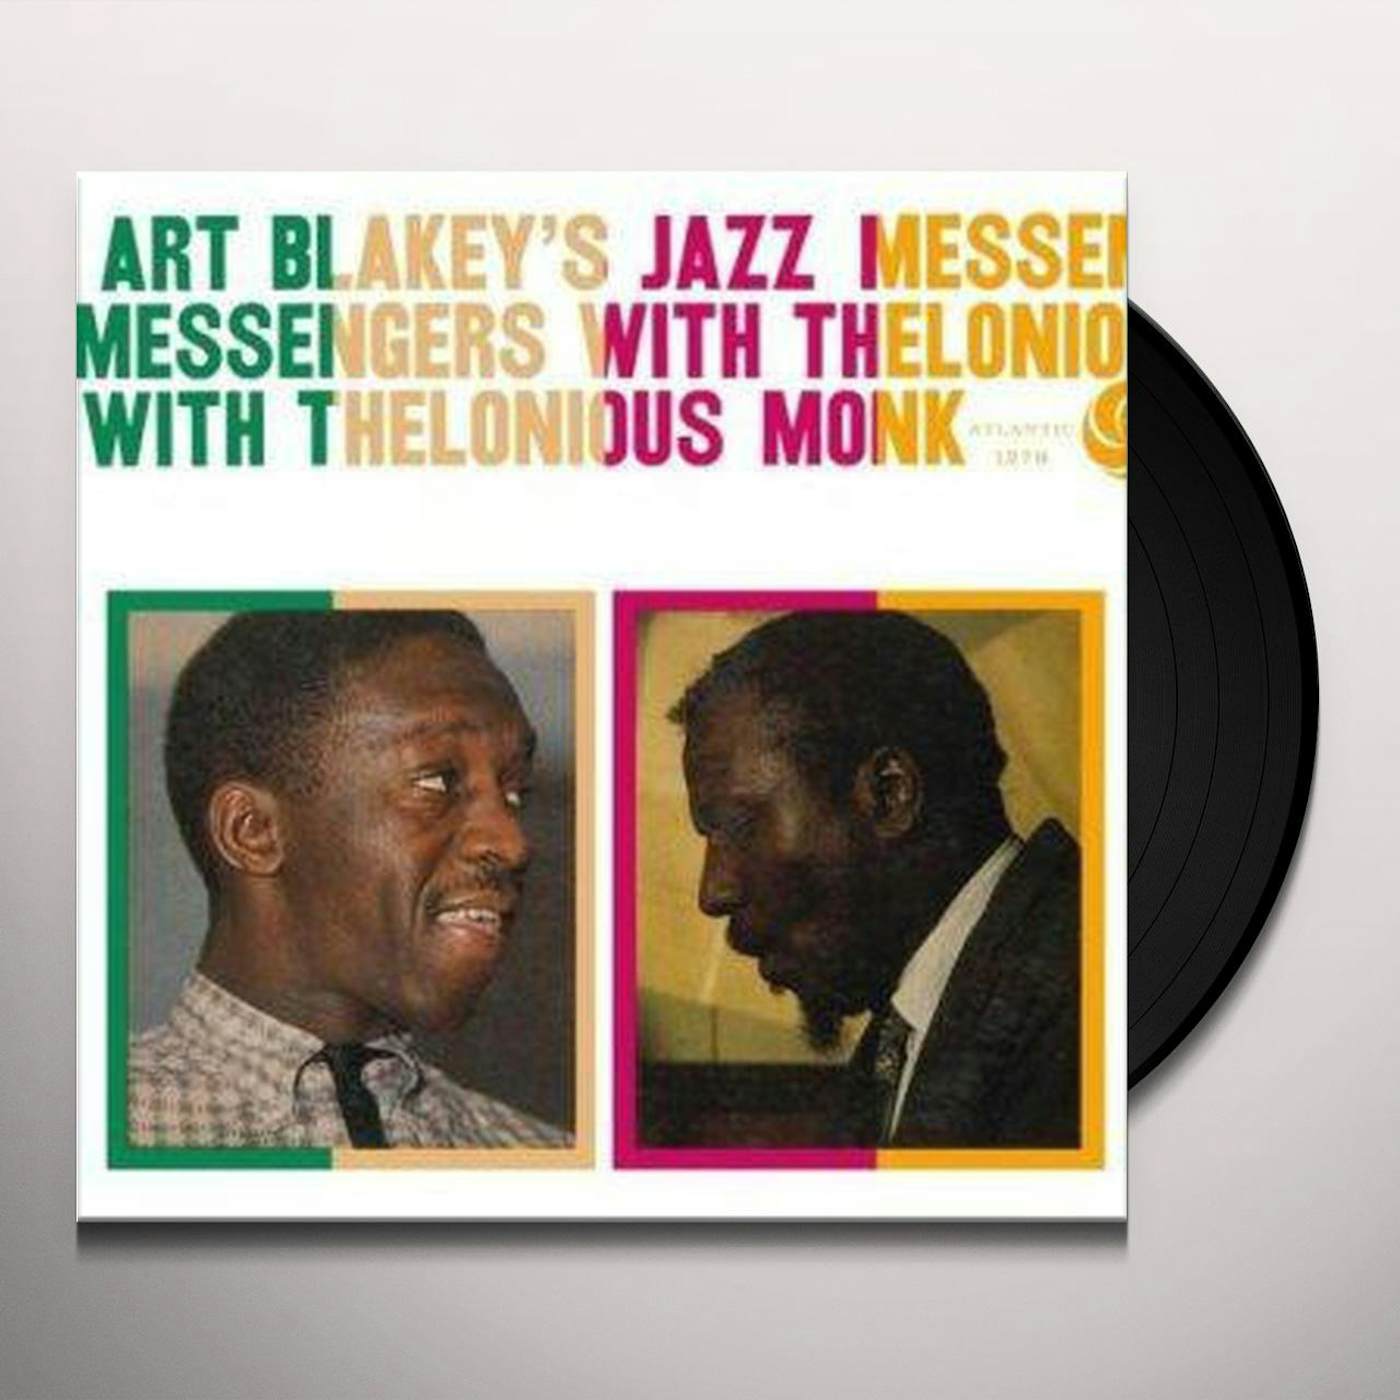 Art Blakey & The Jazz MessengersS JAZZ MESSENGERS WITH THELONIOUS MONK Vinyl Record